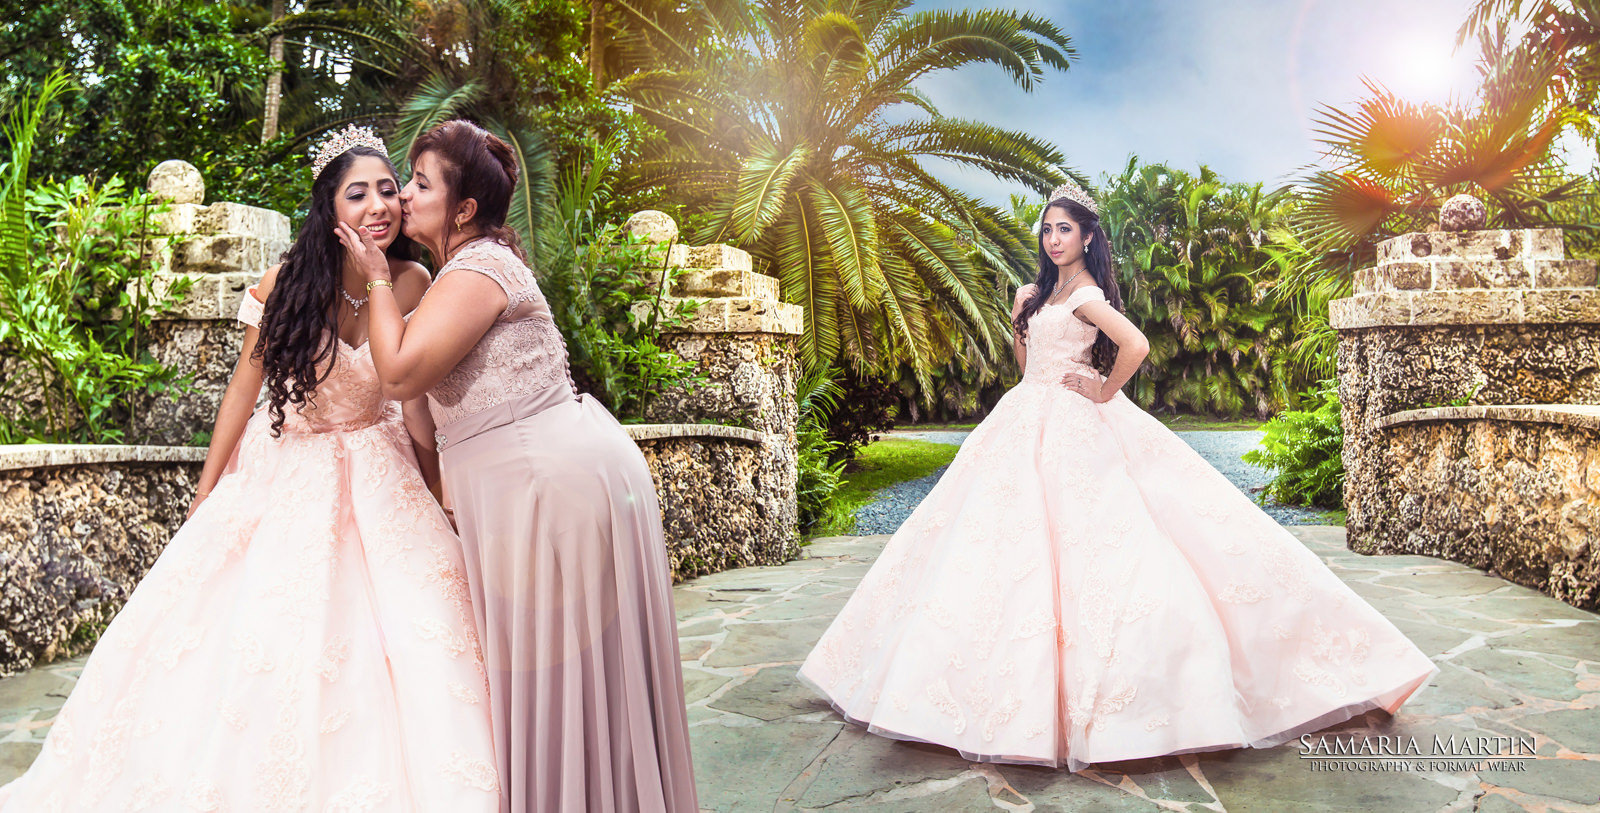 Miami Dress Rental, Morilee dresses, pink quinceañera dresses, quinceañera dresses near me, best Miami photographer